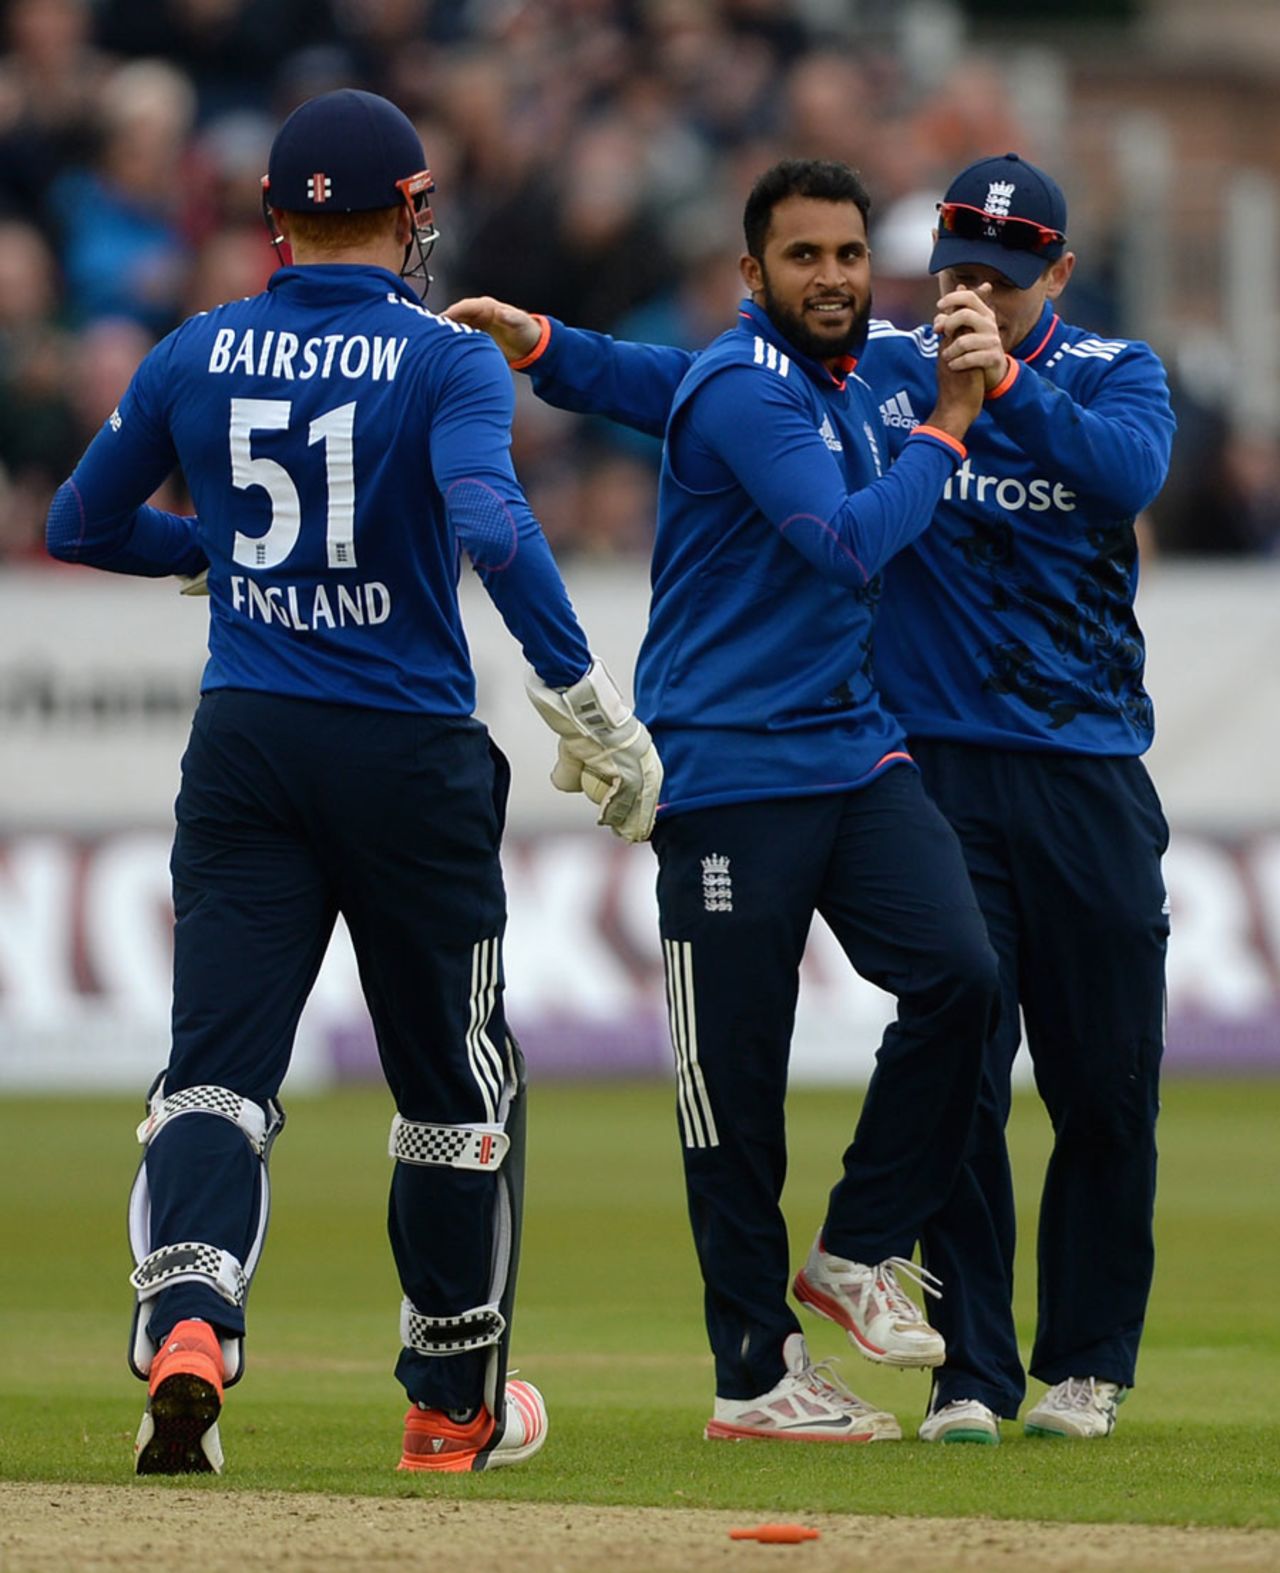 Adil Rashid bowled tidily to take 2 for 45, England v New Zealand, 5th ODI, Chester-le-Street, June 20, 2015